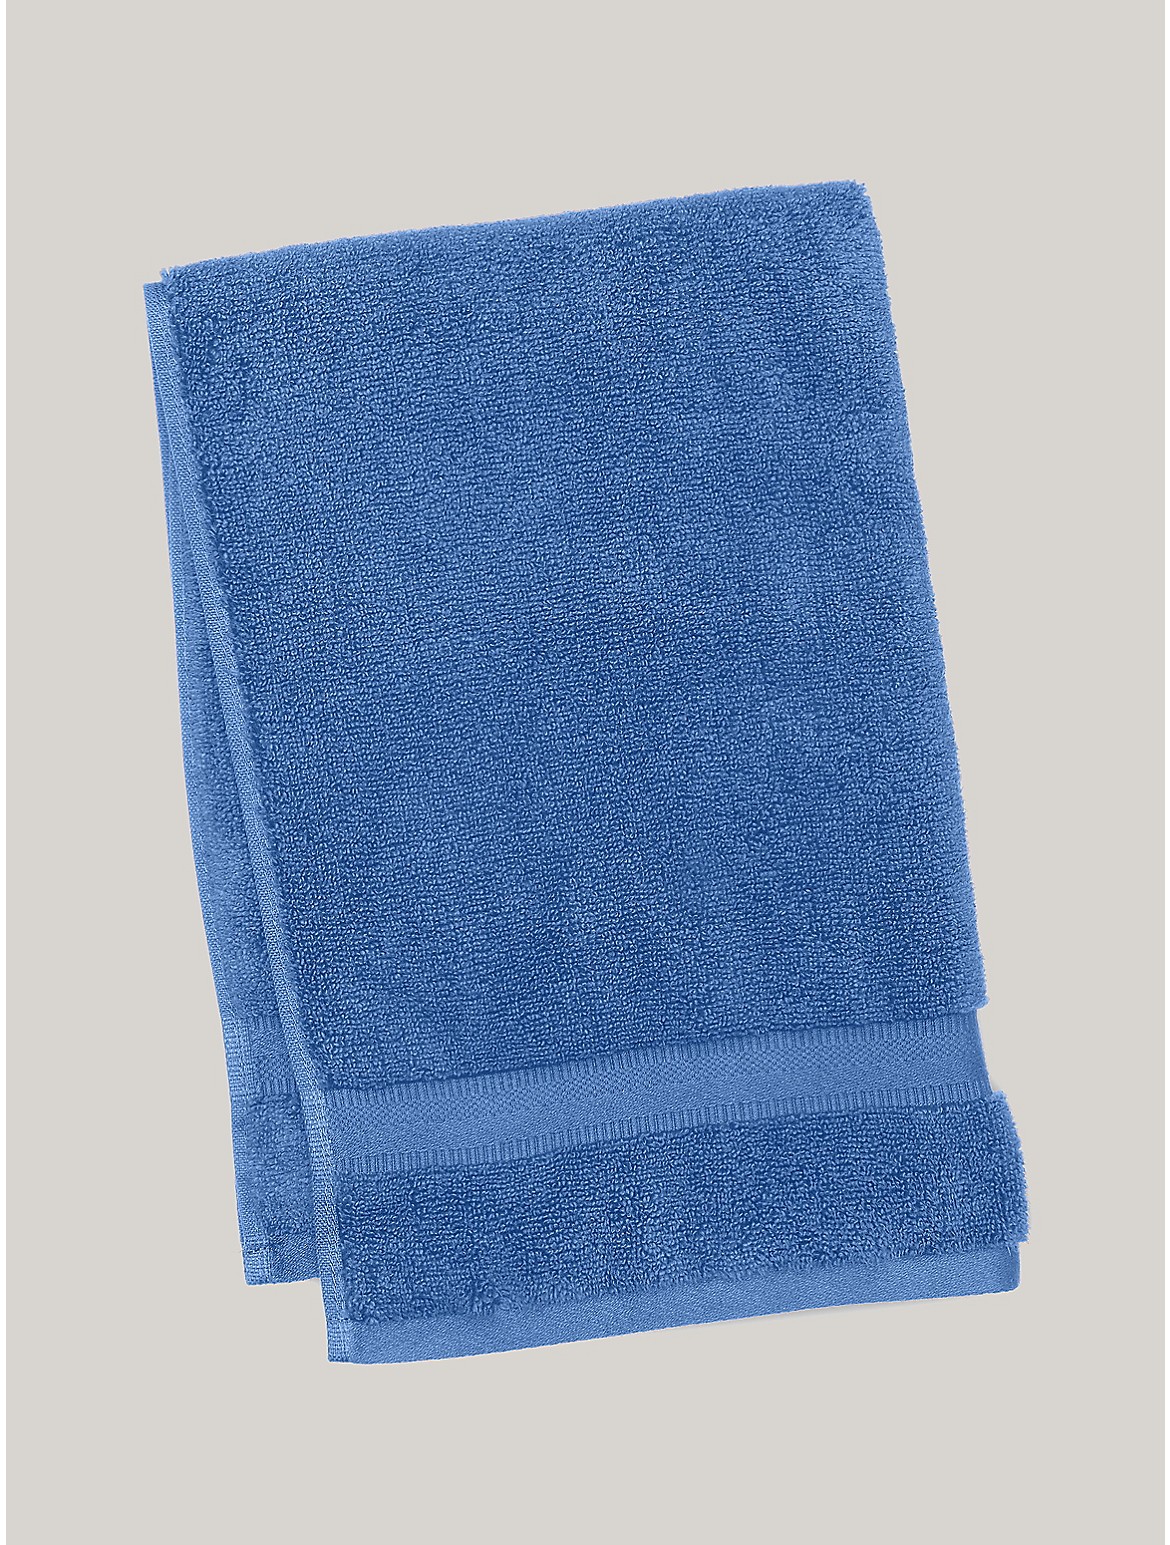 Tommy Hilfiger Signature Solid Hand Towel in Vintage Indigo - Blue